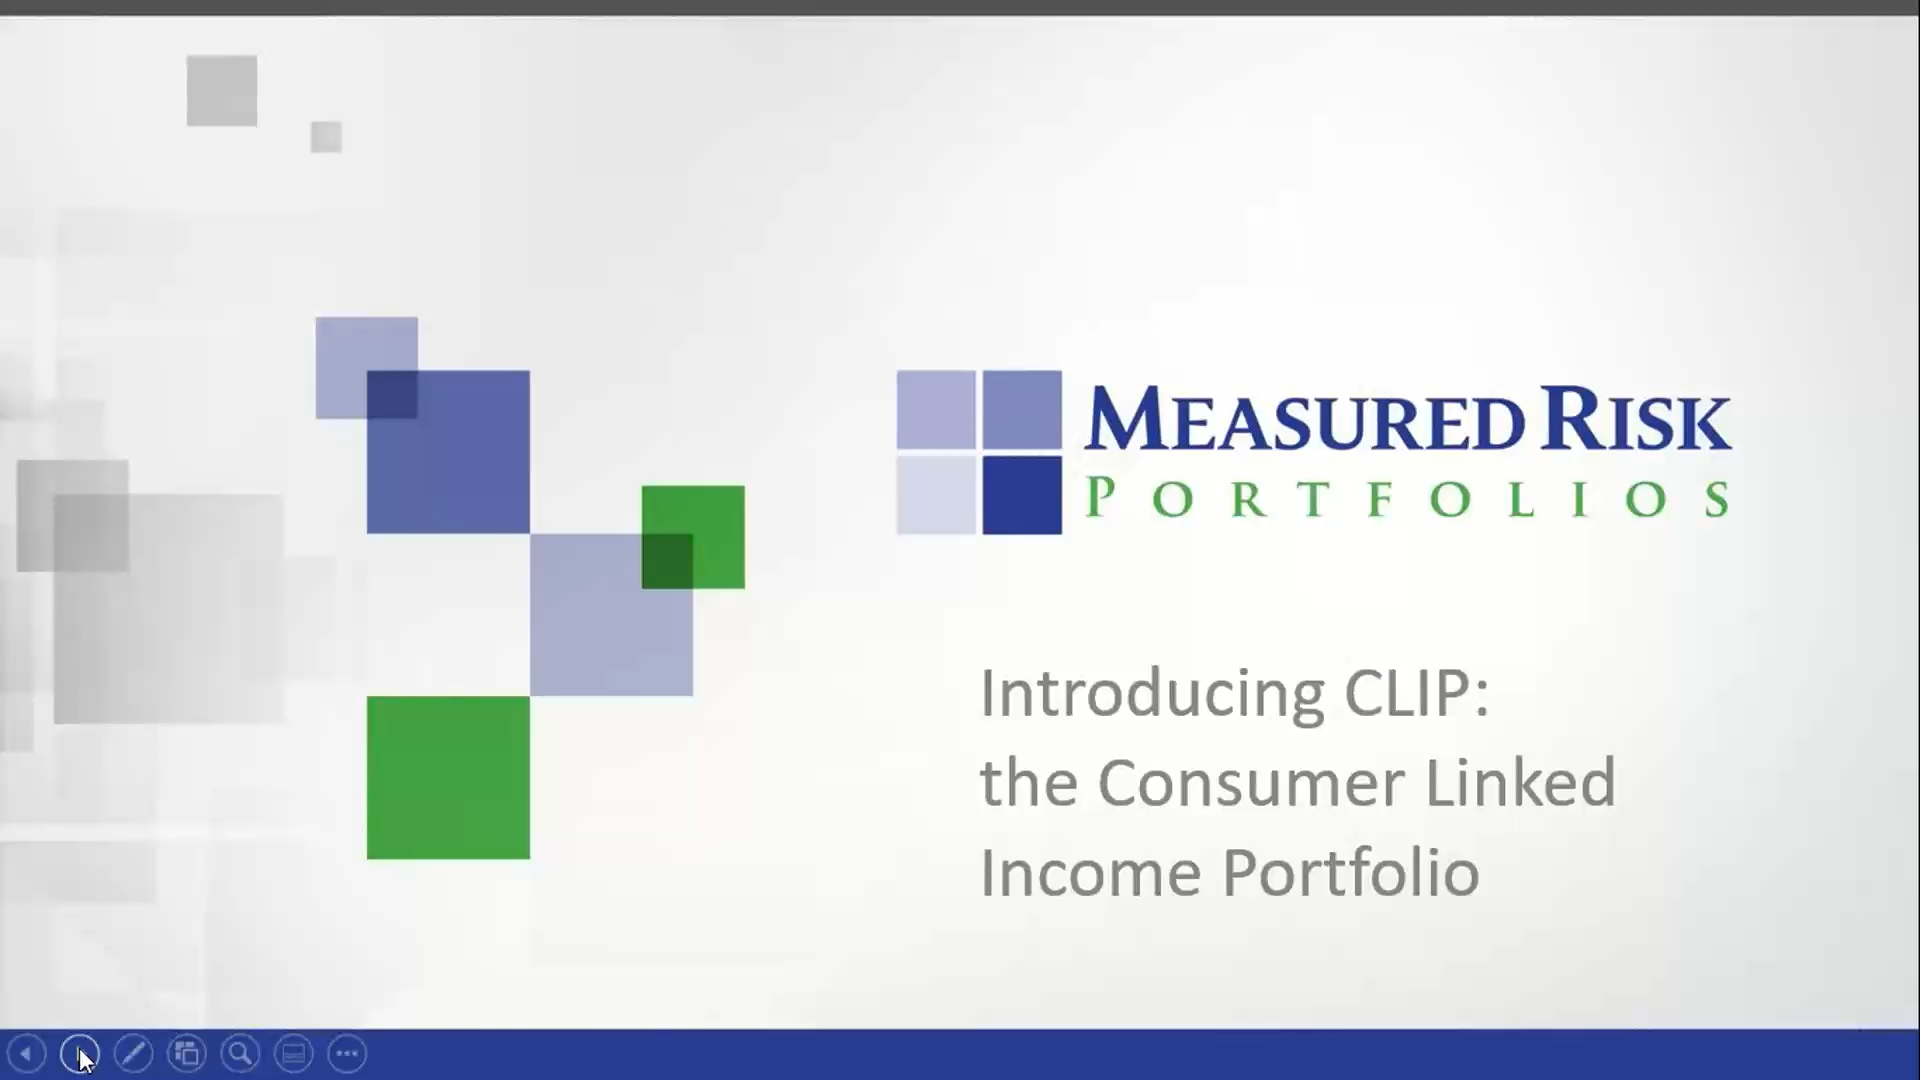 View our Measured Risk Consumer Linked Income Portfolio (CLIP) webinar